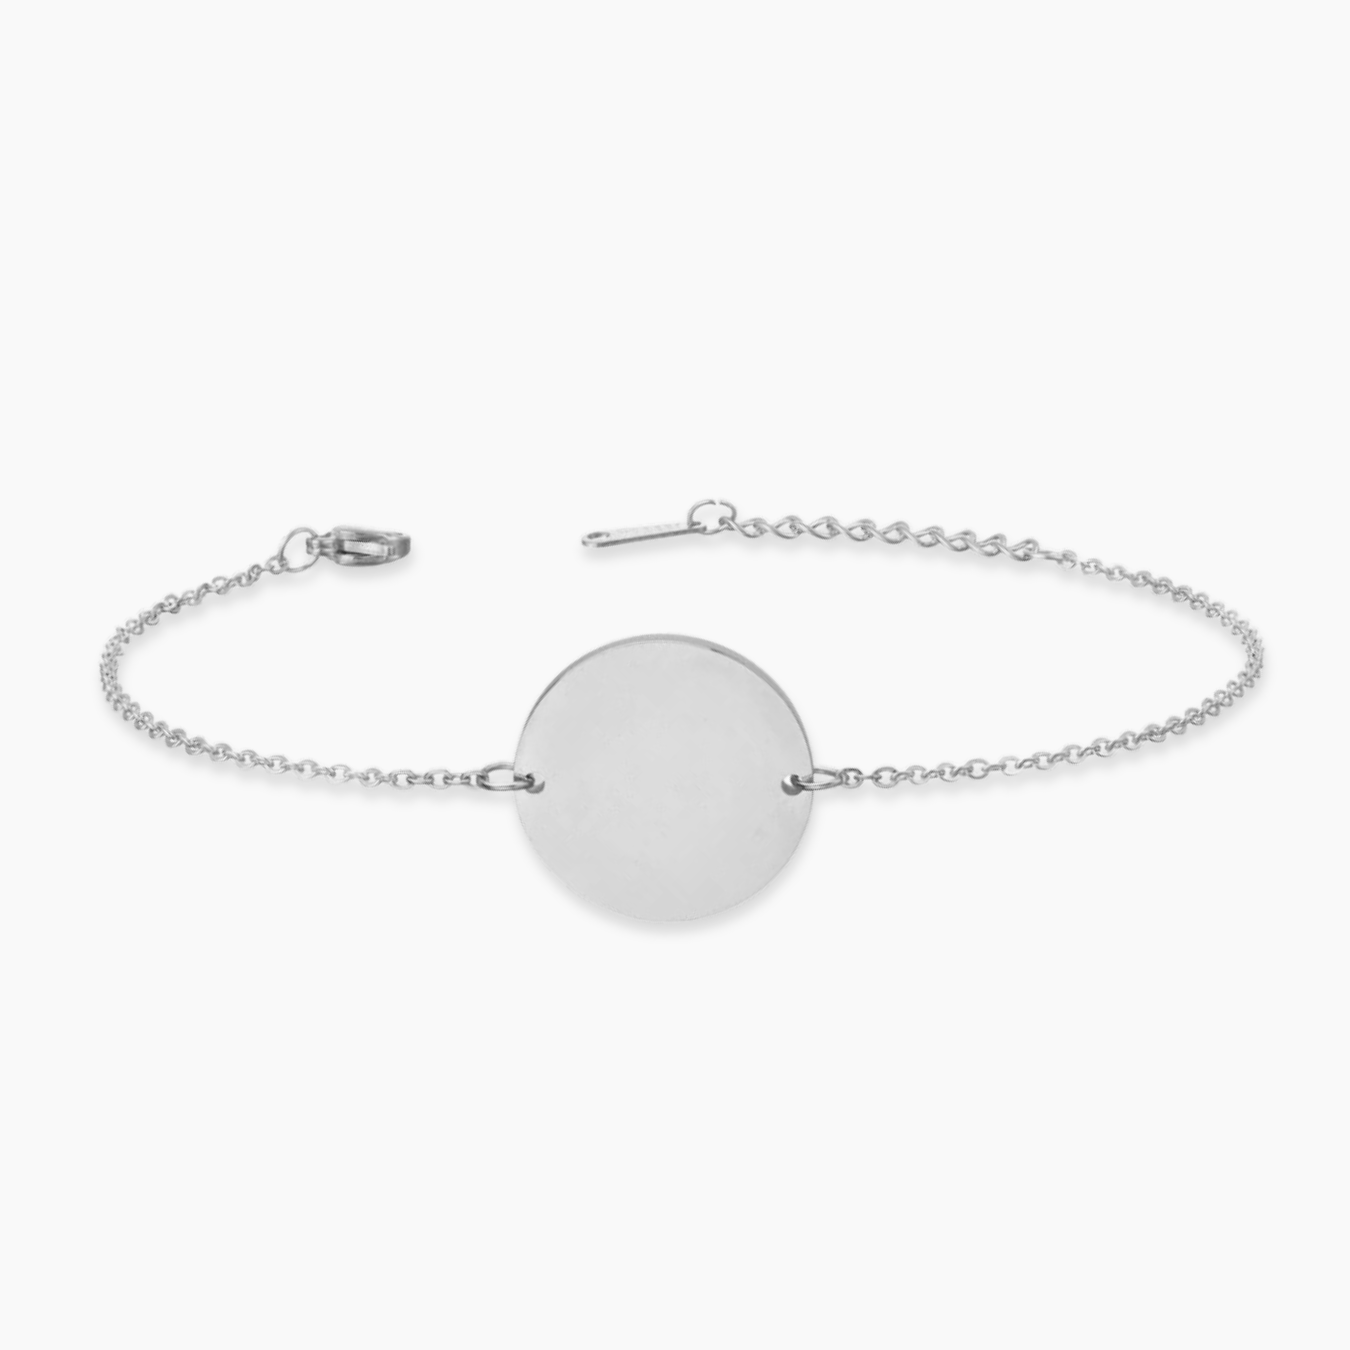 NIRO Personalizable Bracelet | Initials